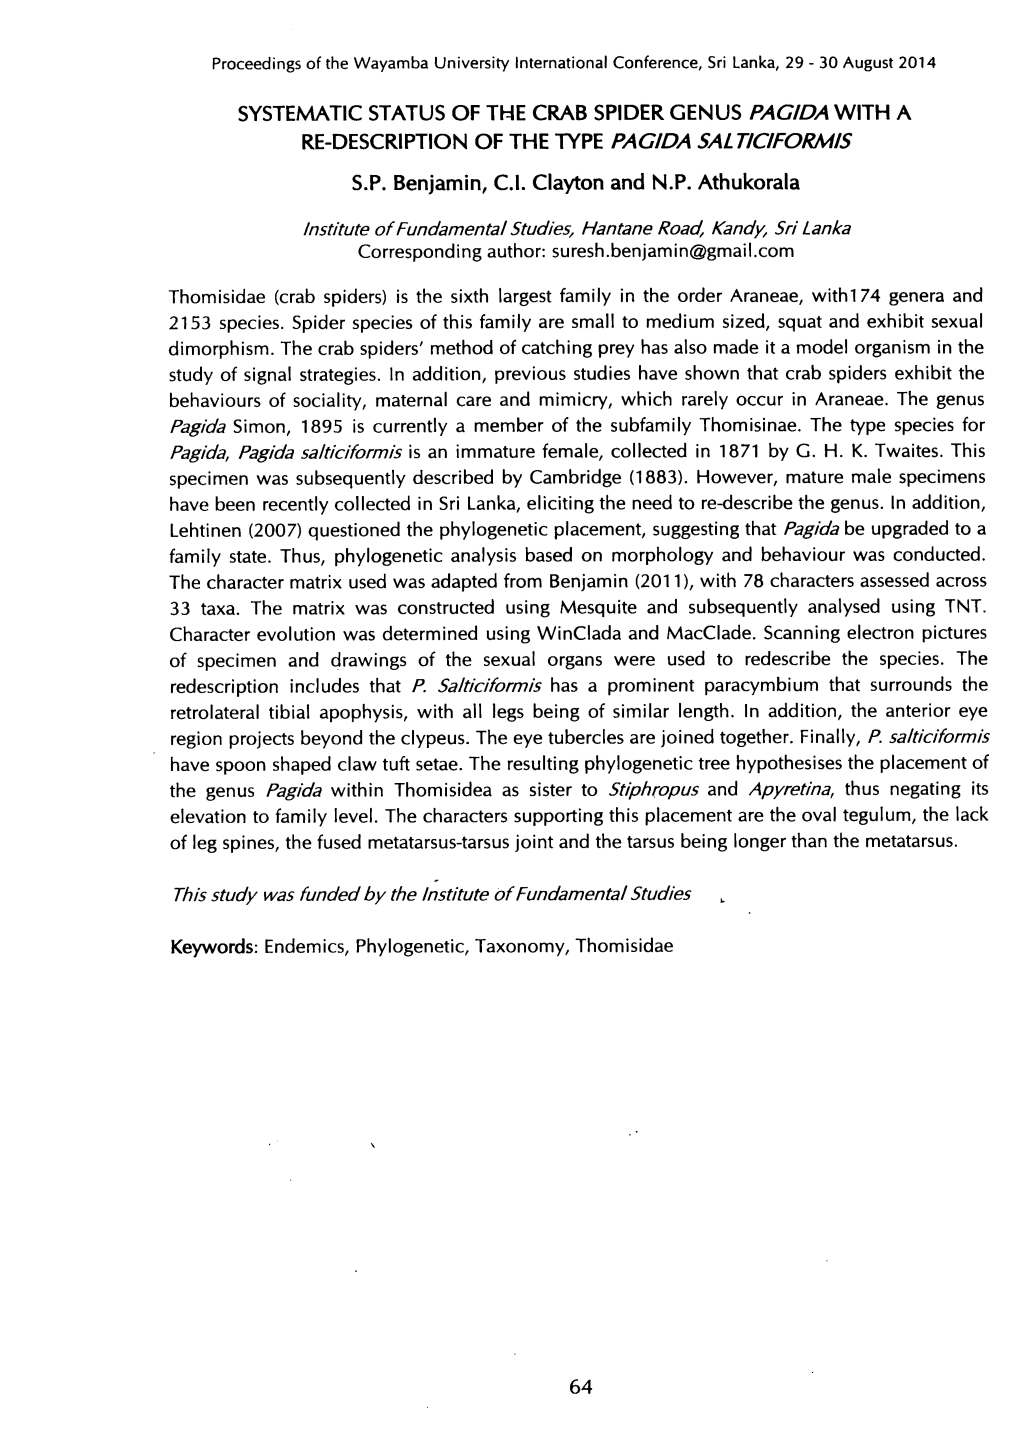 SYSTEMATIC STATUS of the CRAB SPIDER GENUS PAG IDA with a RE-DESCRIPTION of the TYPE PAGIDA SAL TICIFORMIS S.P. Benjamin, C.I. C